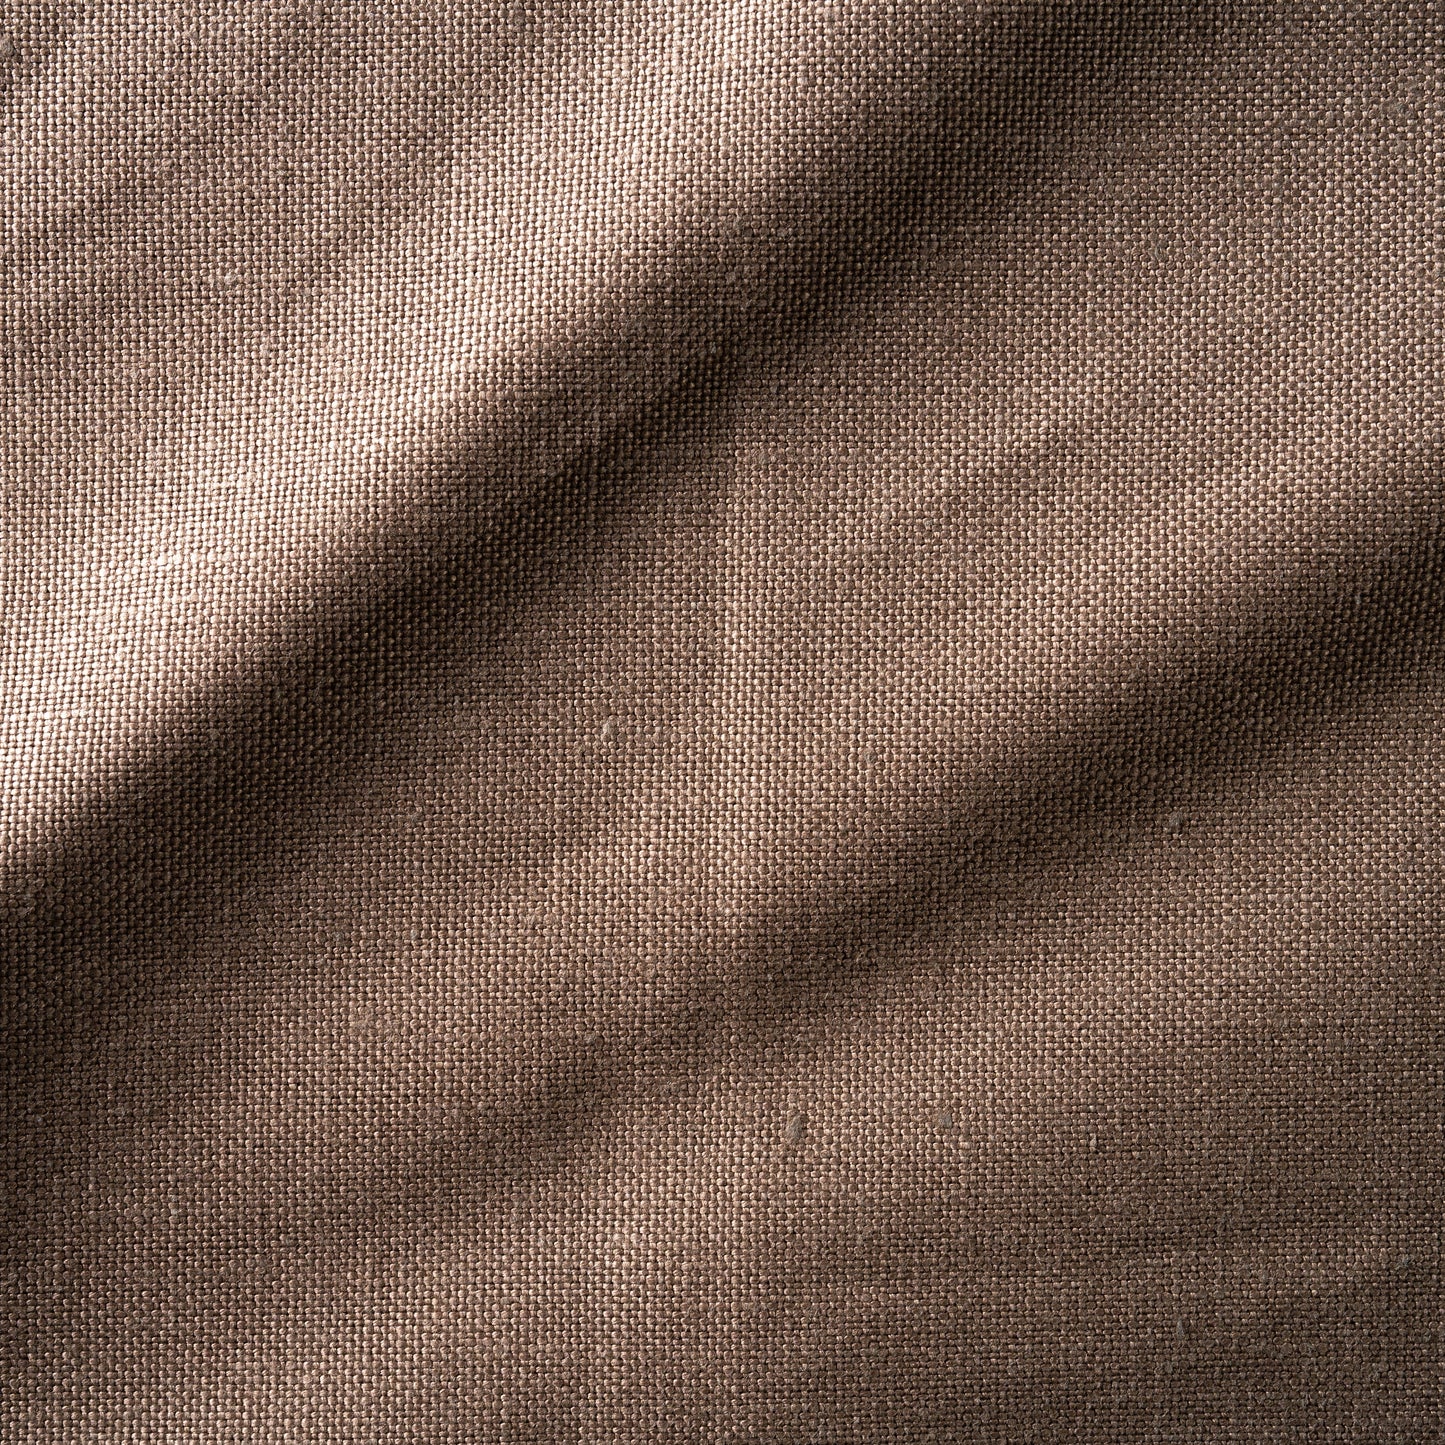 12 oz/sq yard 100% Upholstery/ Slipcover Weight Linen in Bark